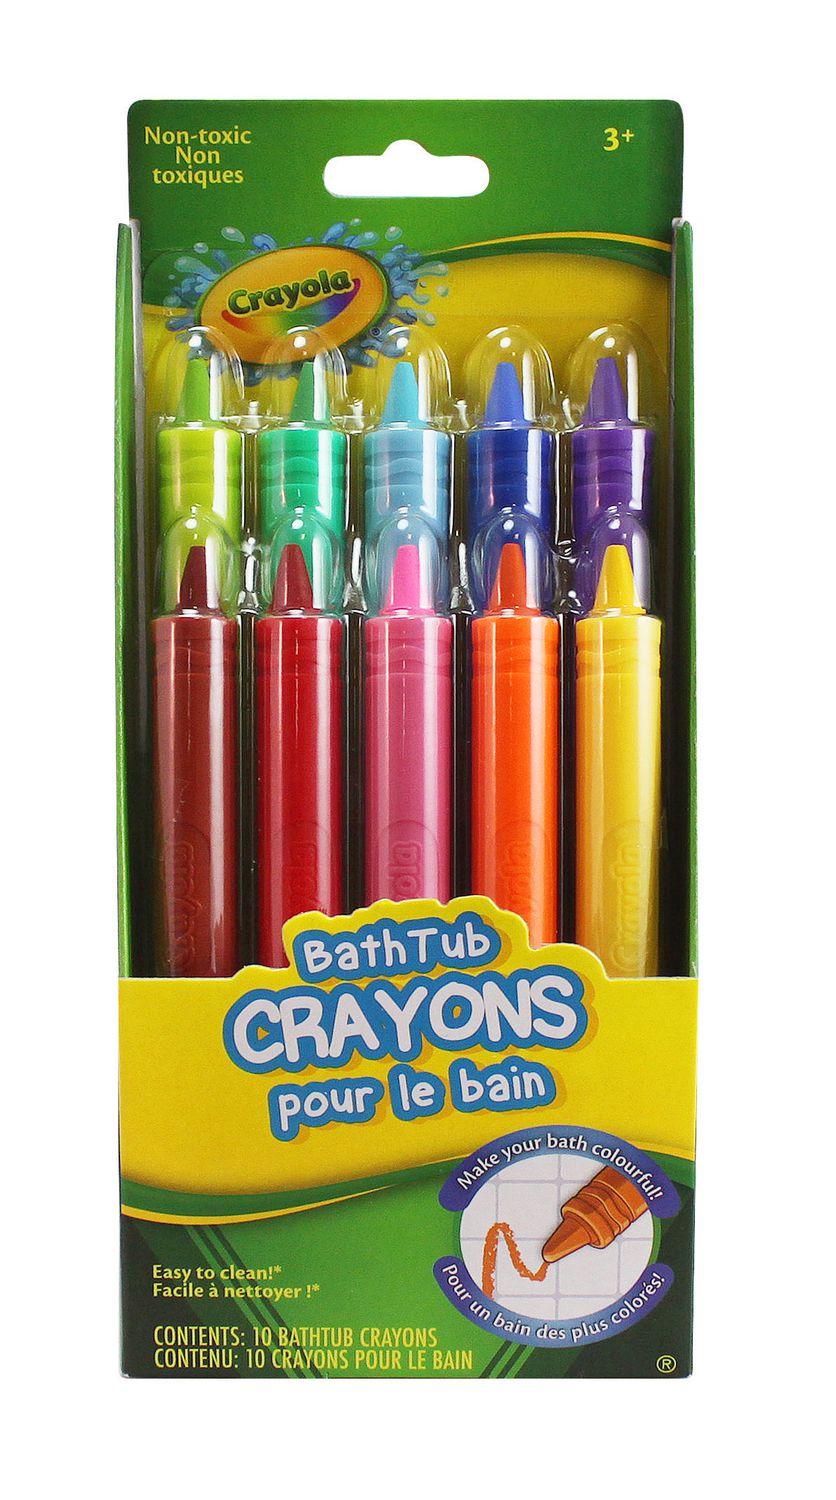 Crayola Tub Crayons Deals Online, Save 45% | jlcatj.gob.mx